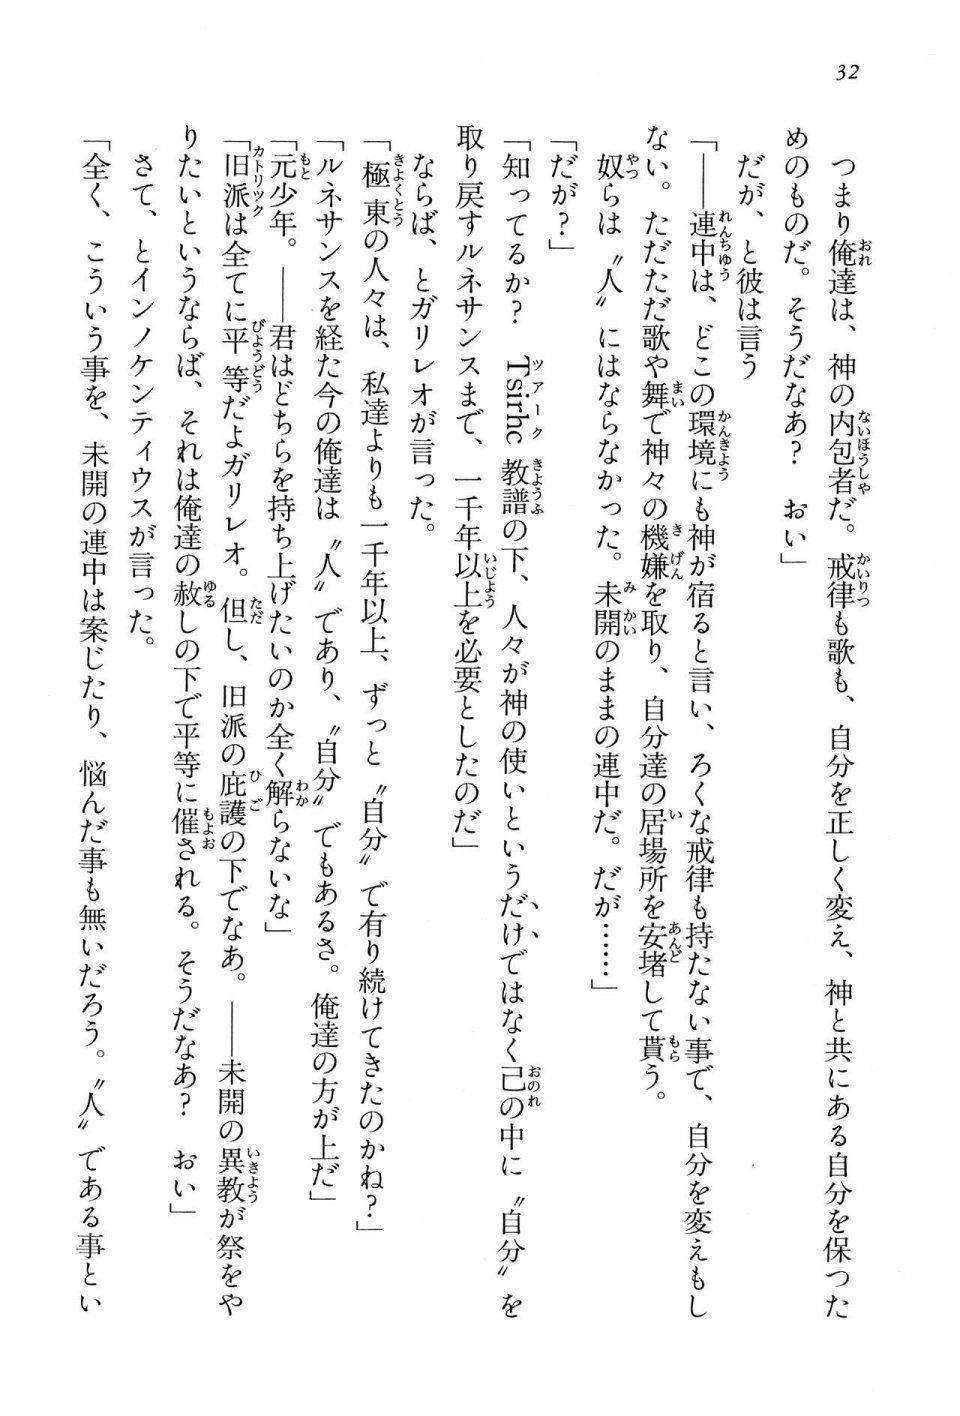 Kyoukai Senjou no Horizon BD Special Mininovel Vol 1(1A) - Photo #36